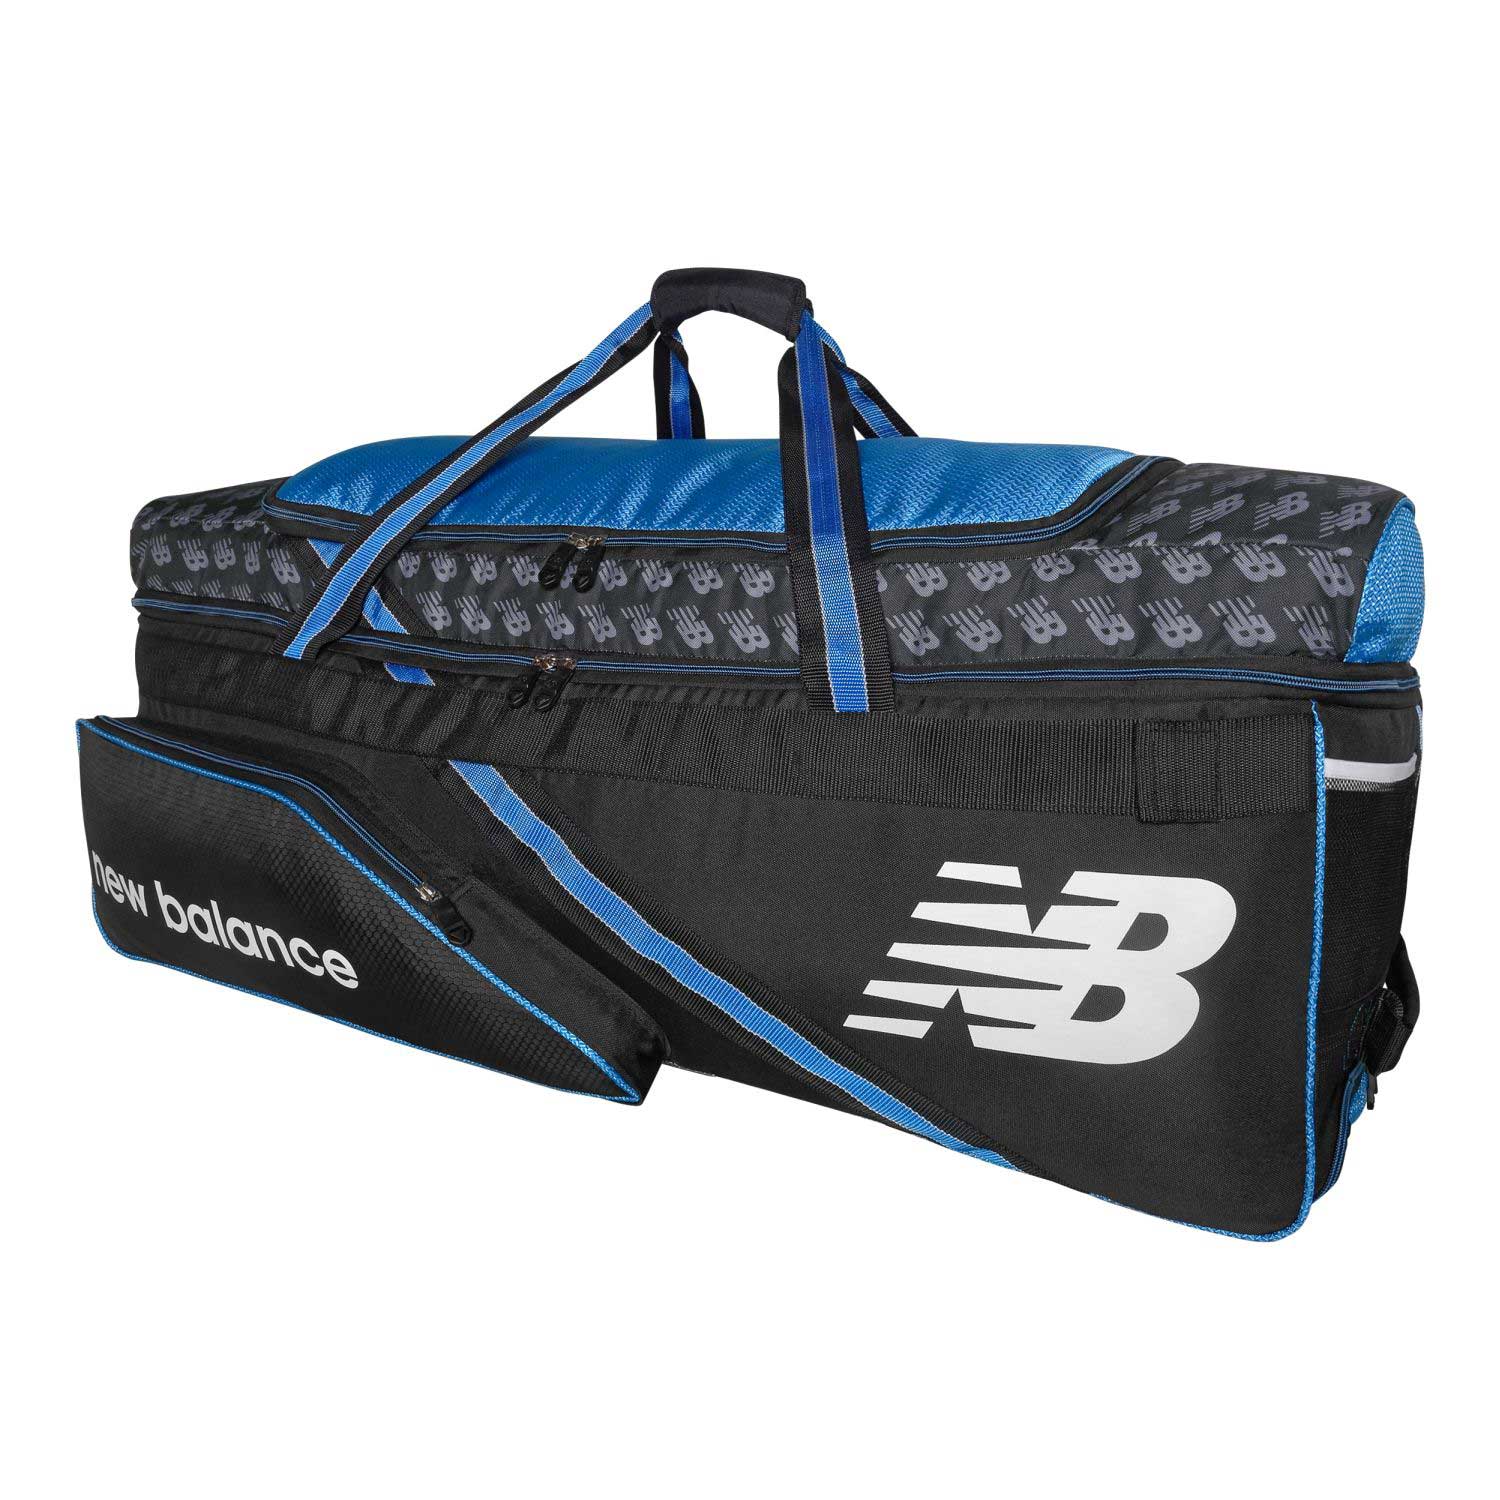 New Balance Burn 870 Cricket Wheelie Bag